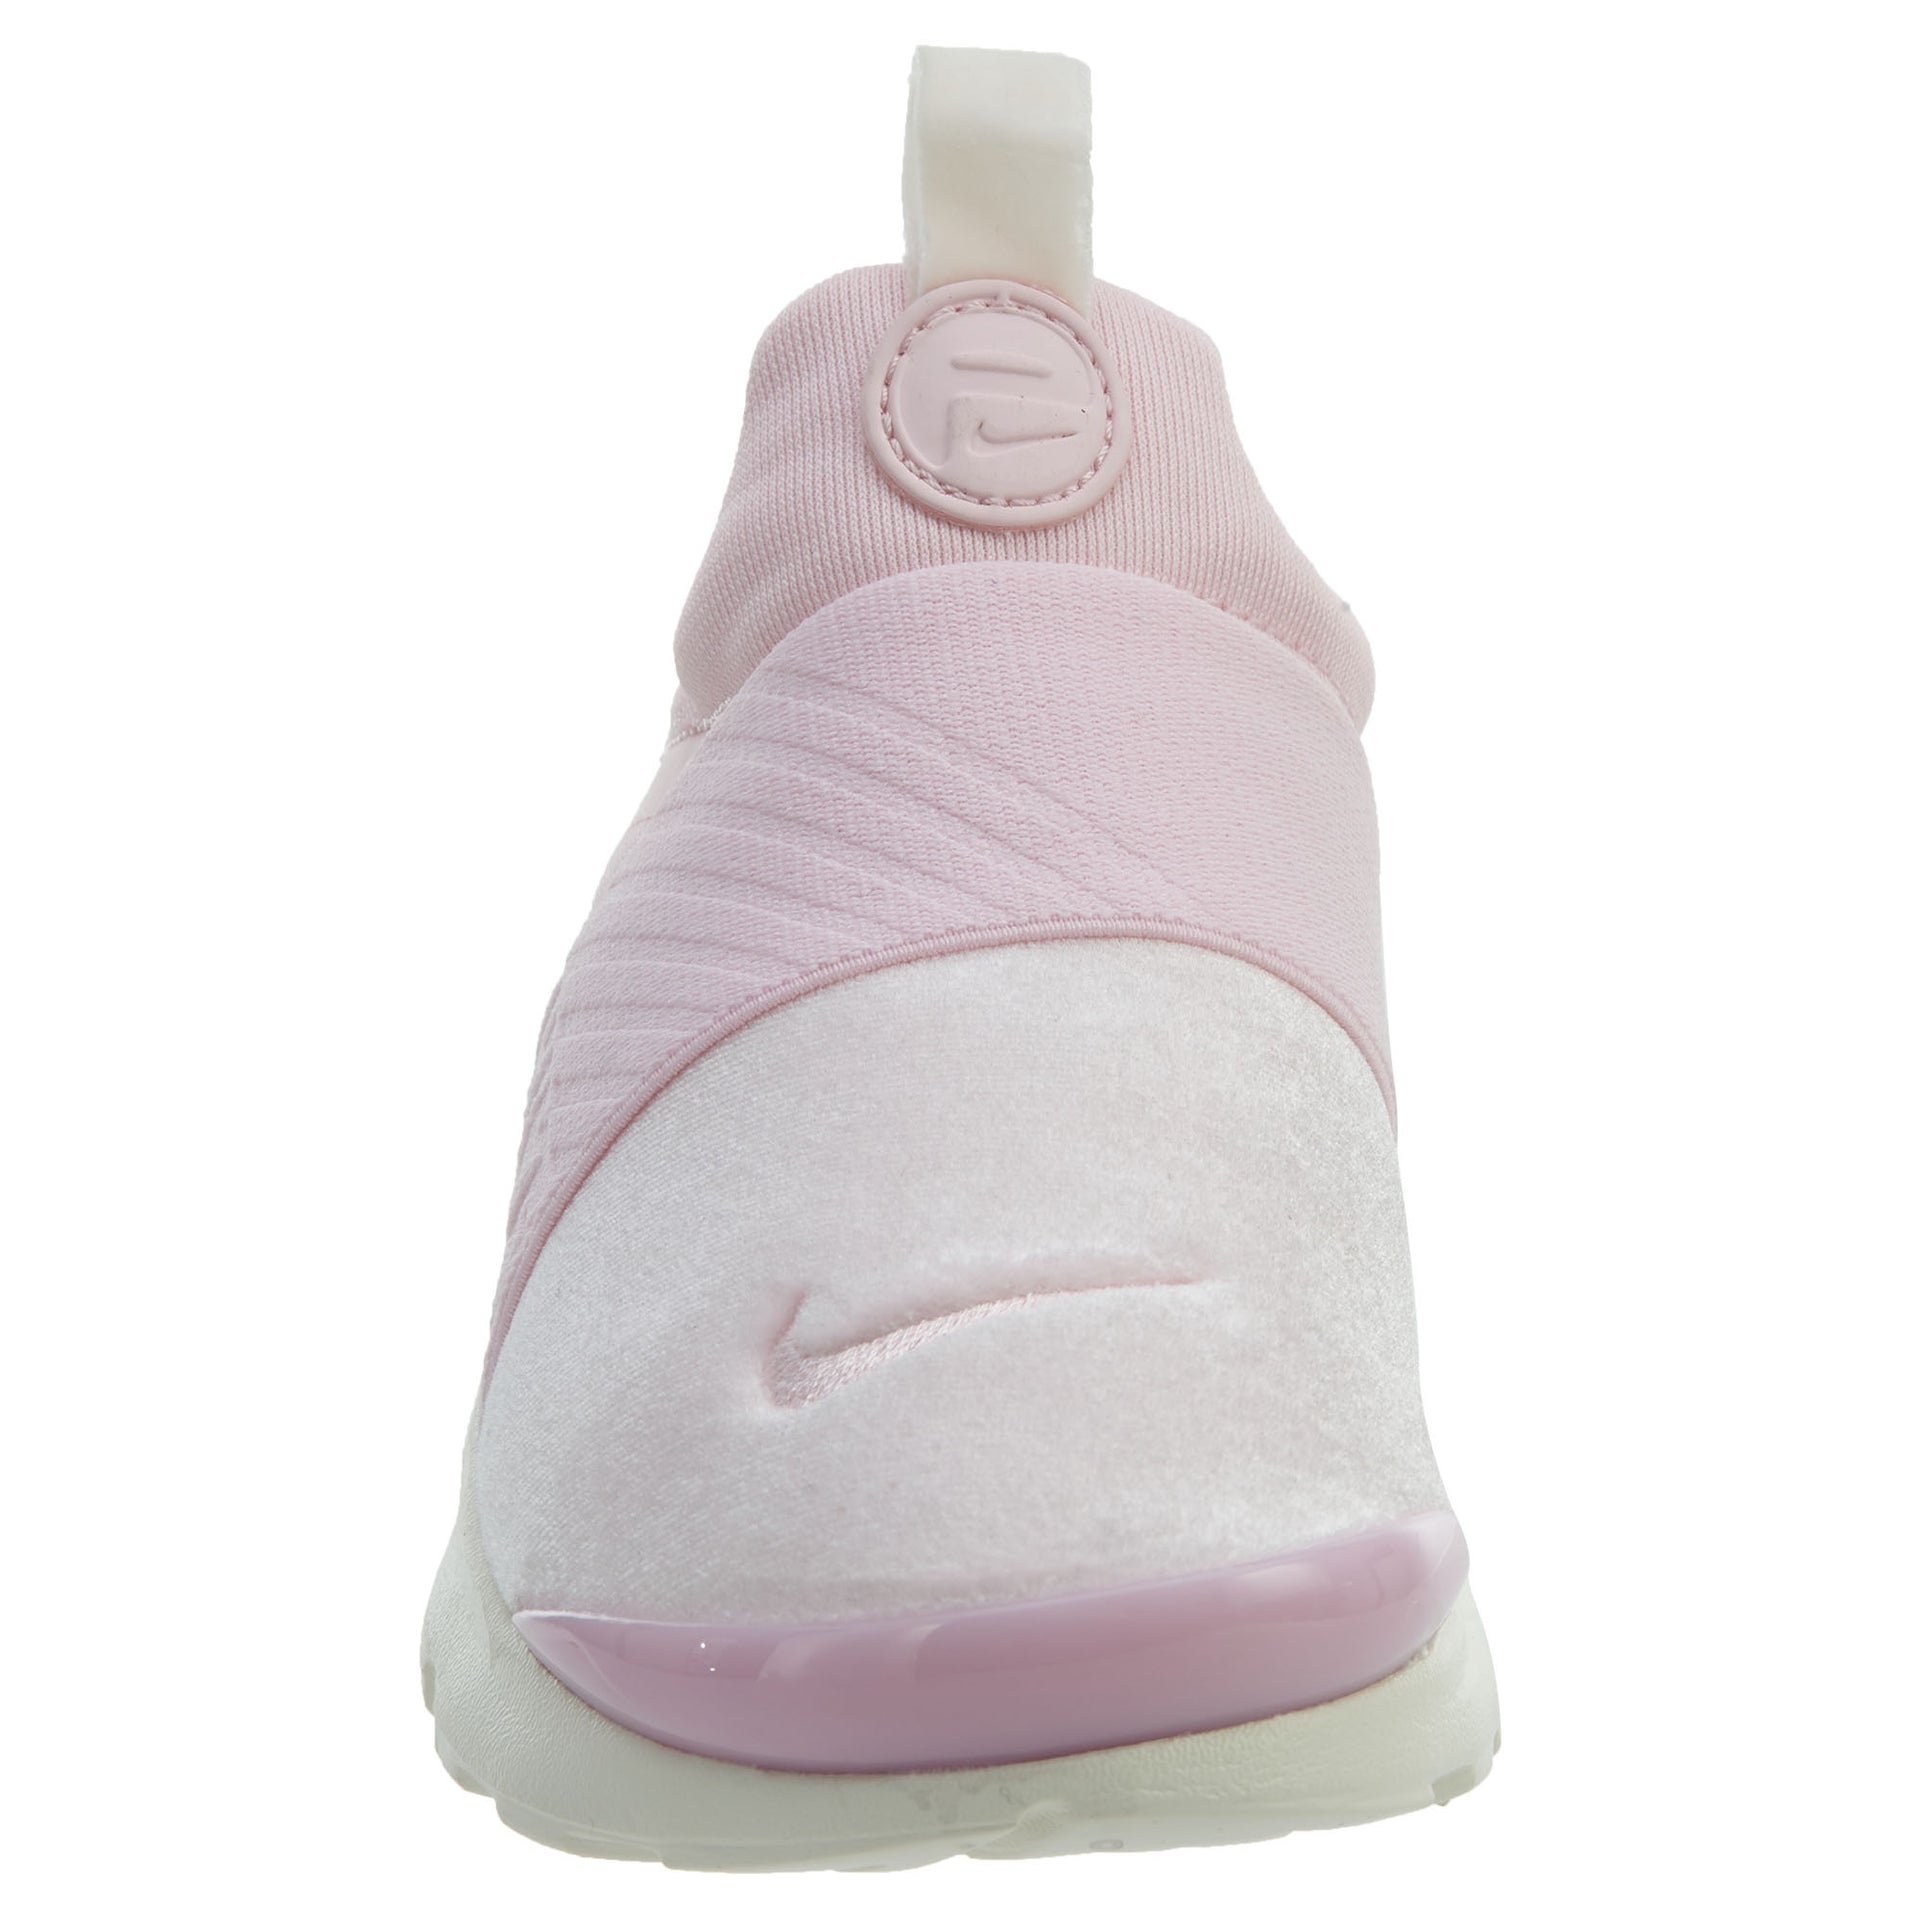 Nike Presto Extreme SE Arctic Pink Shoes Boys / Girls Style :AA3515